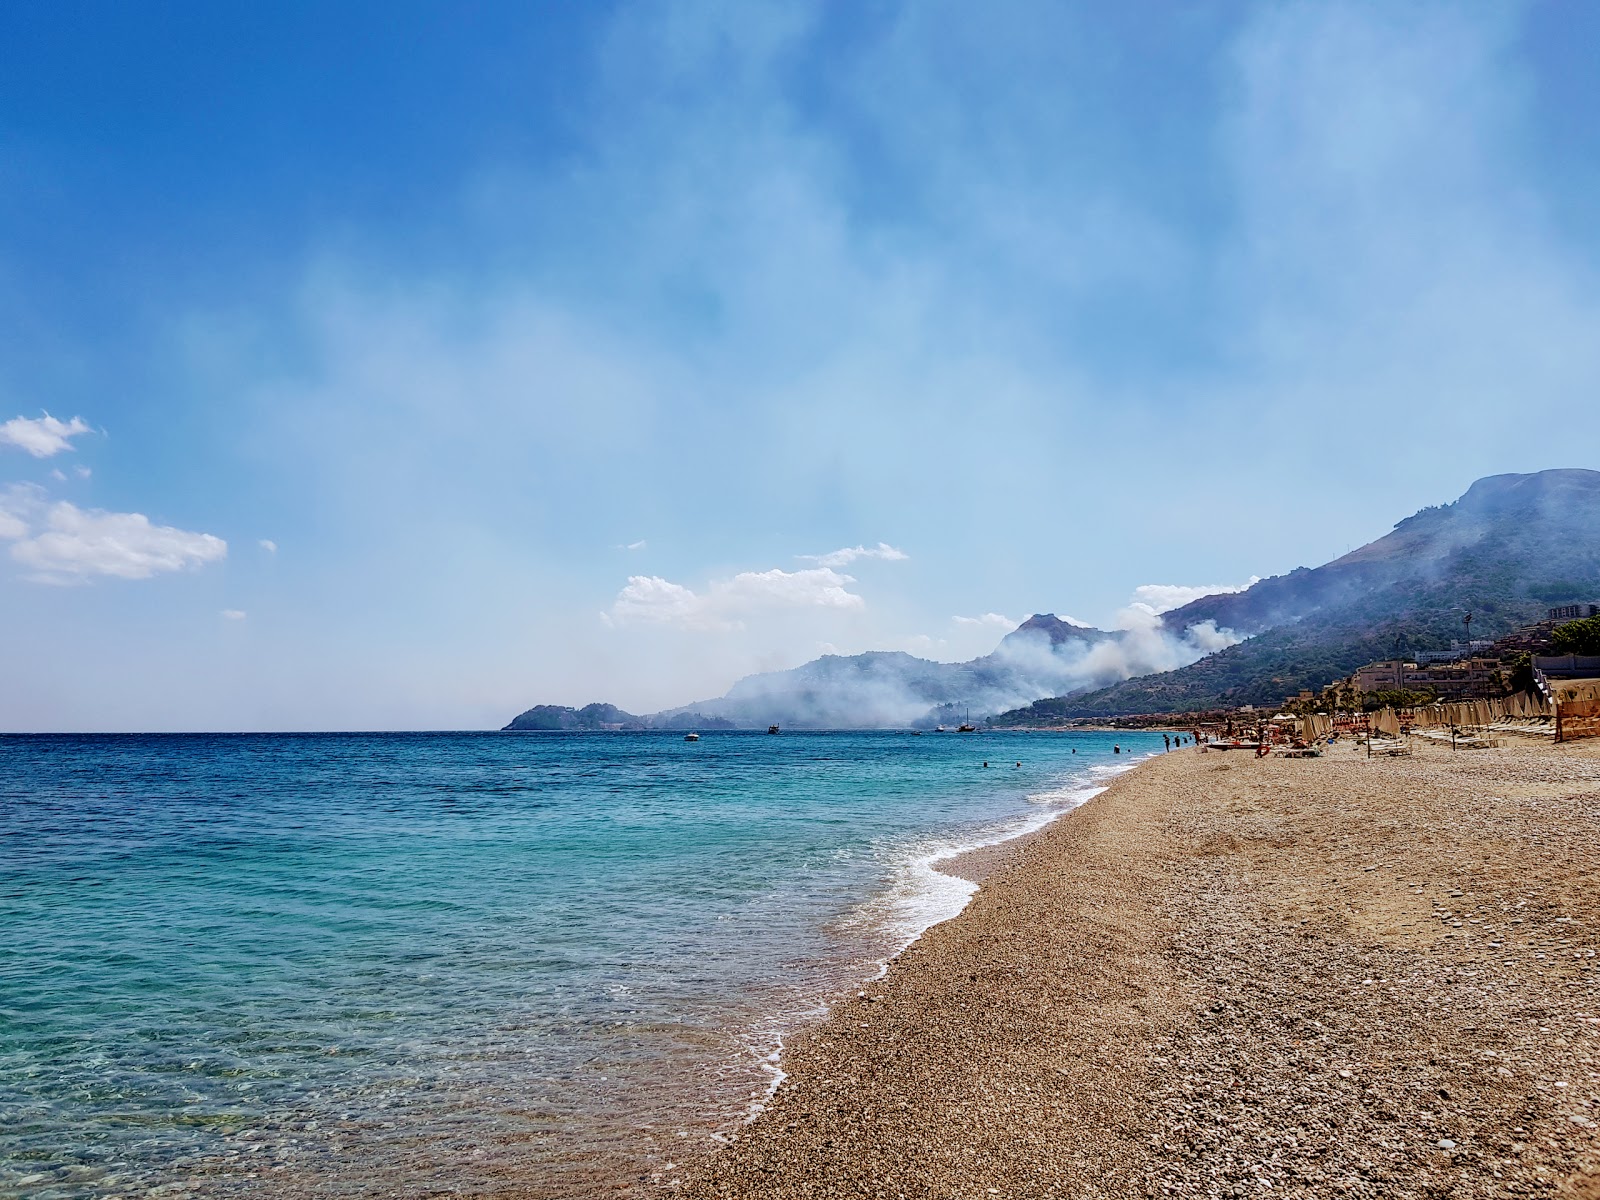 Foto von Spiaggia di Letojanni II mit heller kies Oberfläche